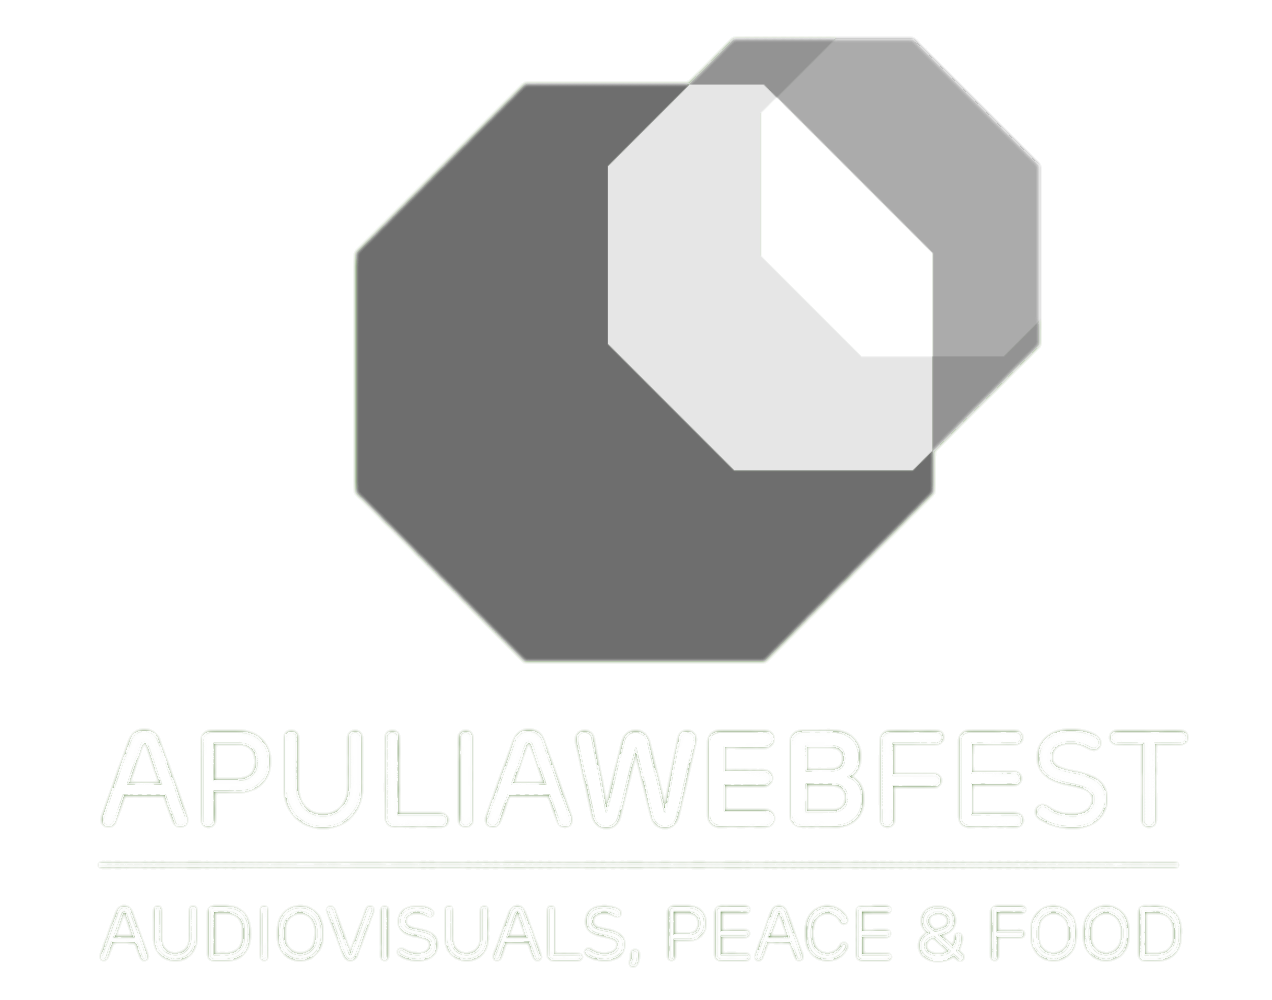 APULIA WEB FEST